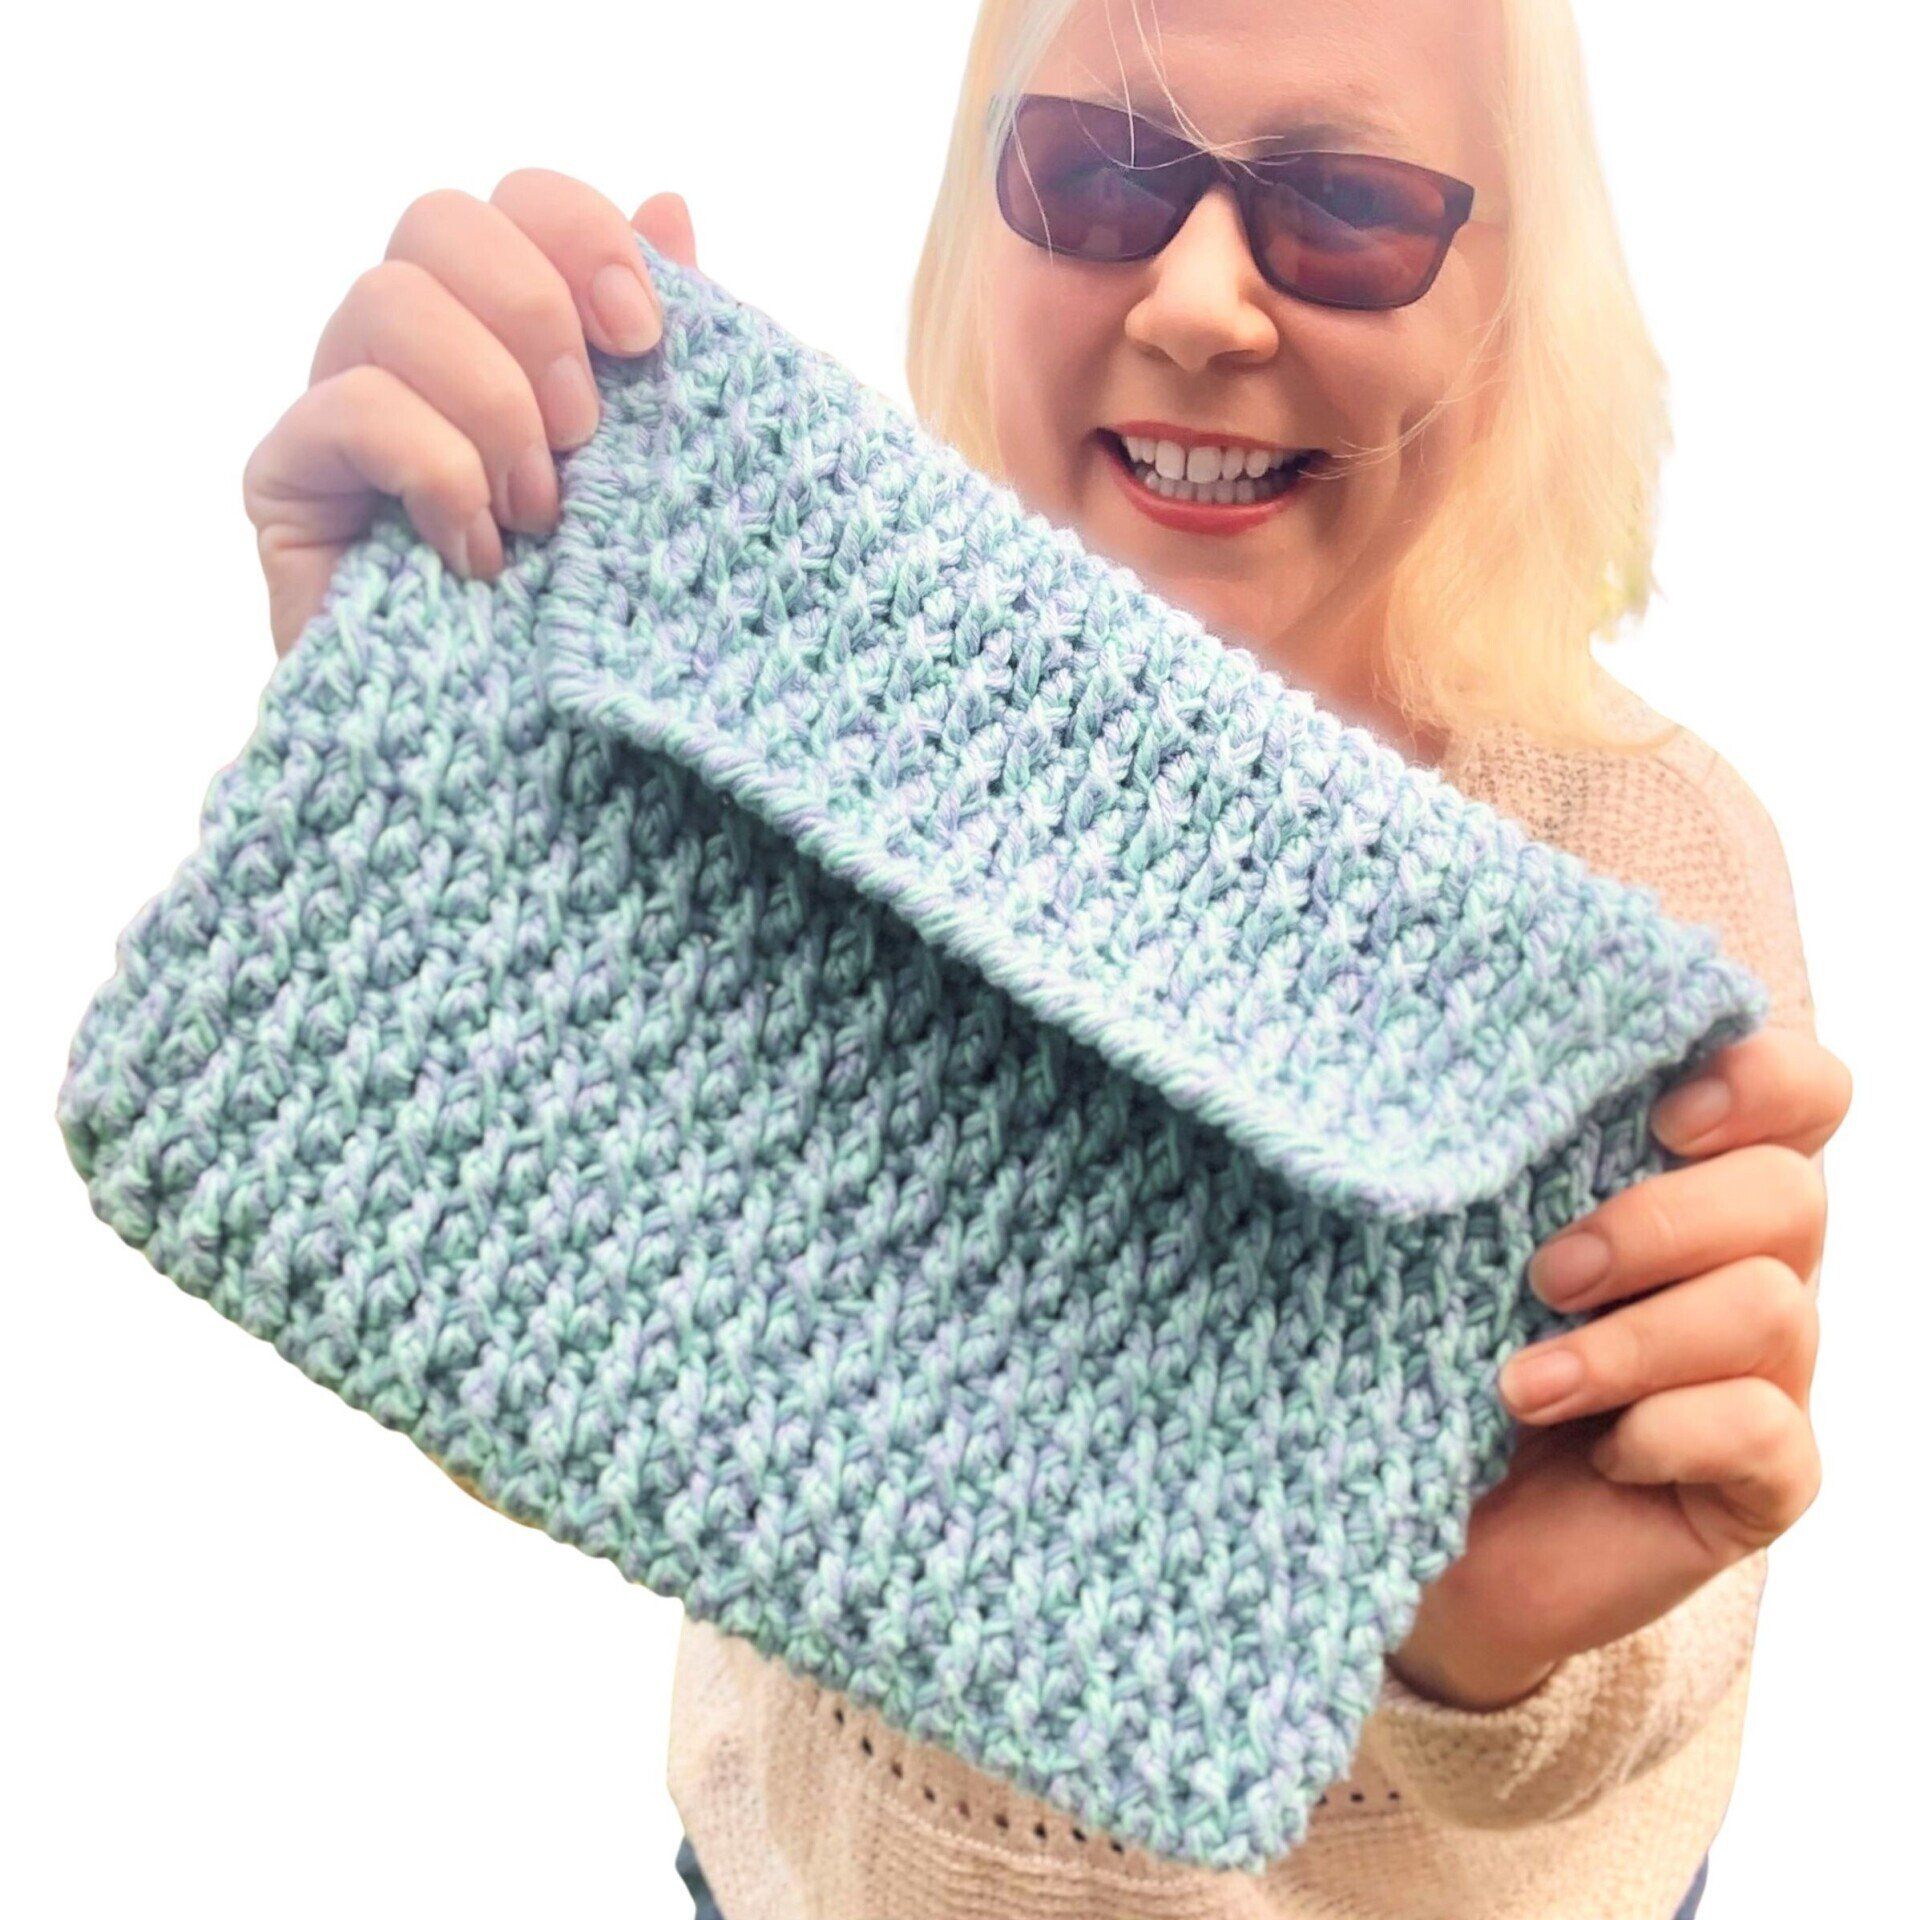 Clutch Bag Crochet Pattern – A heart shaped cherry